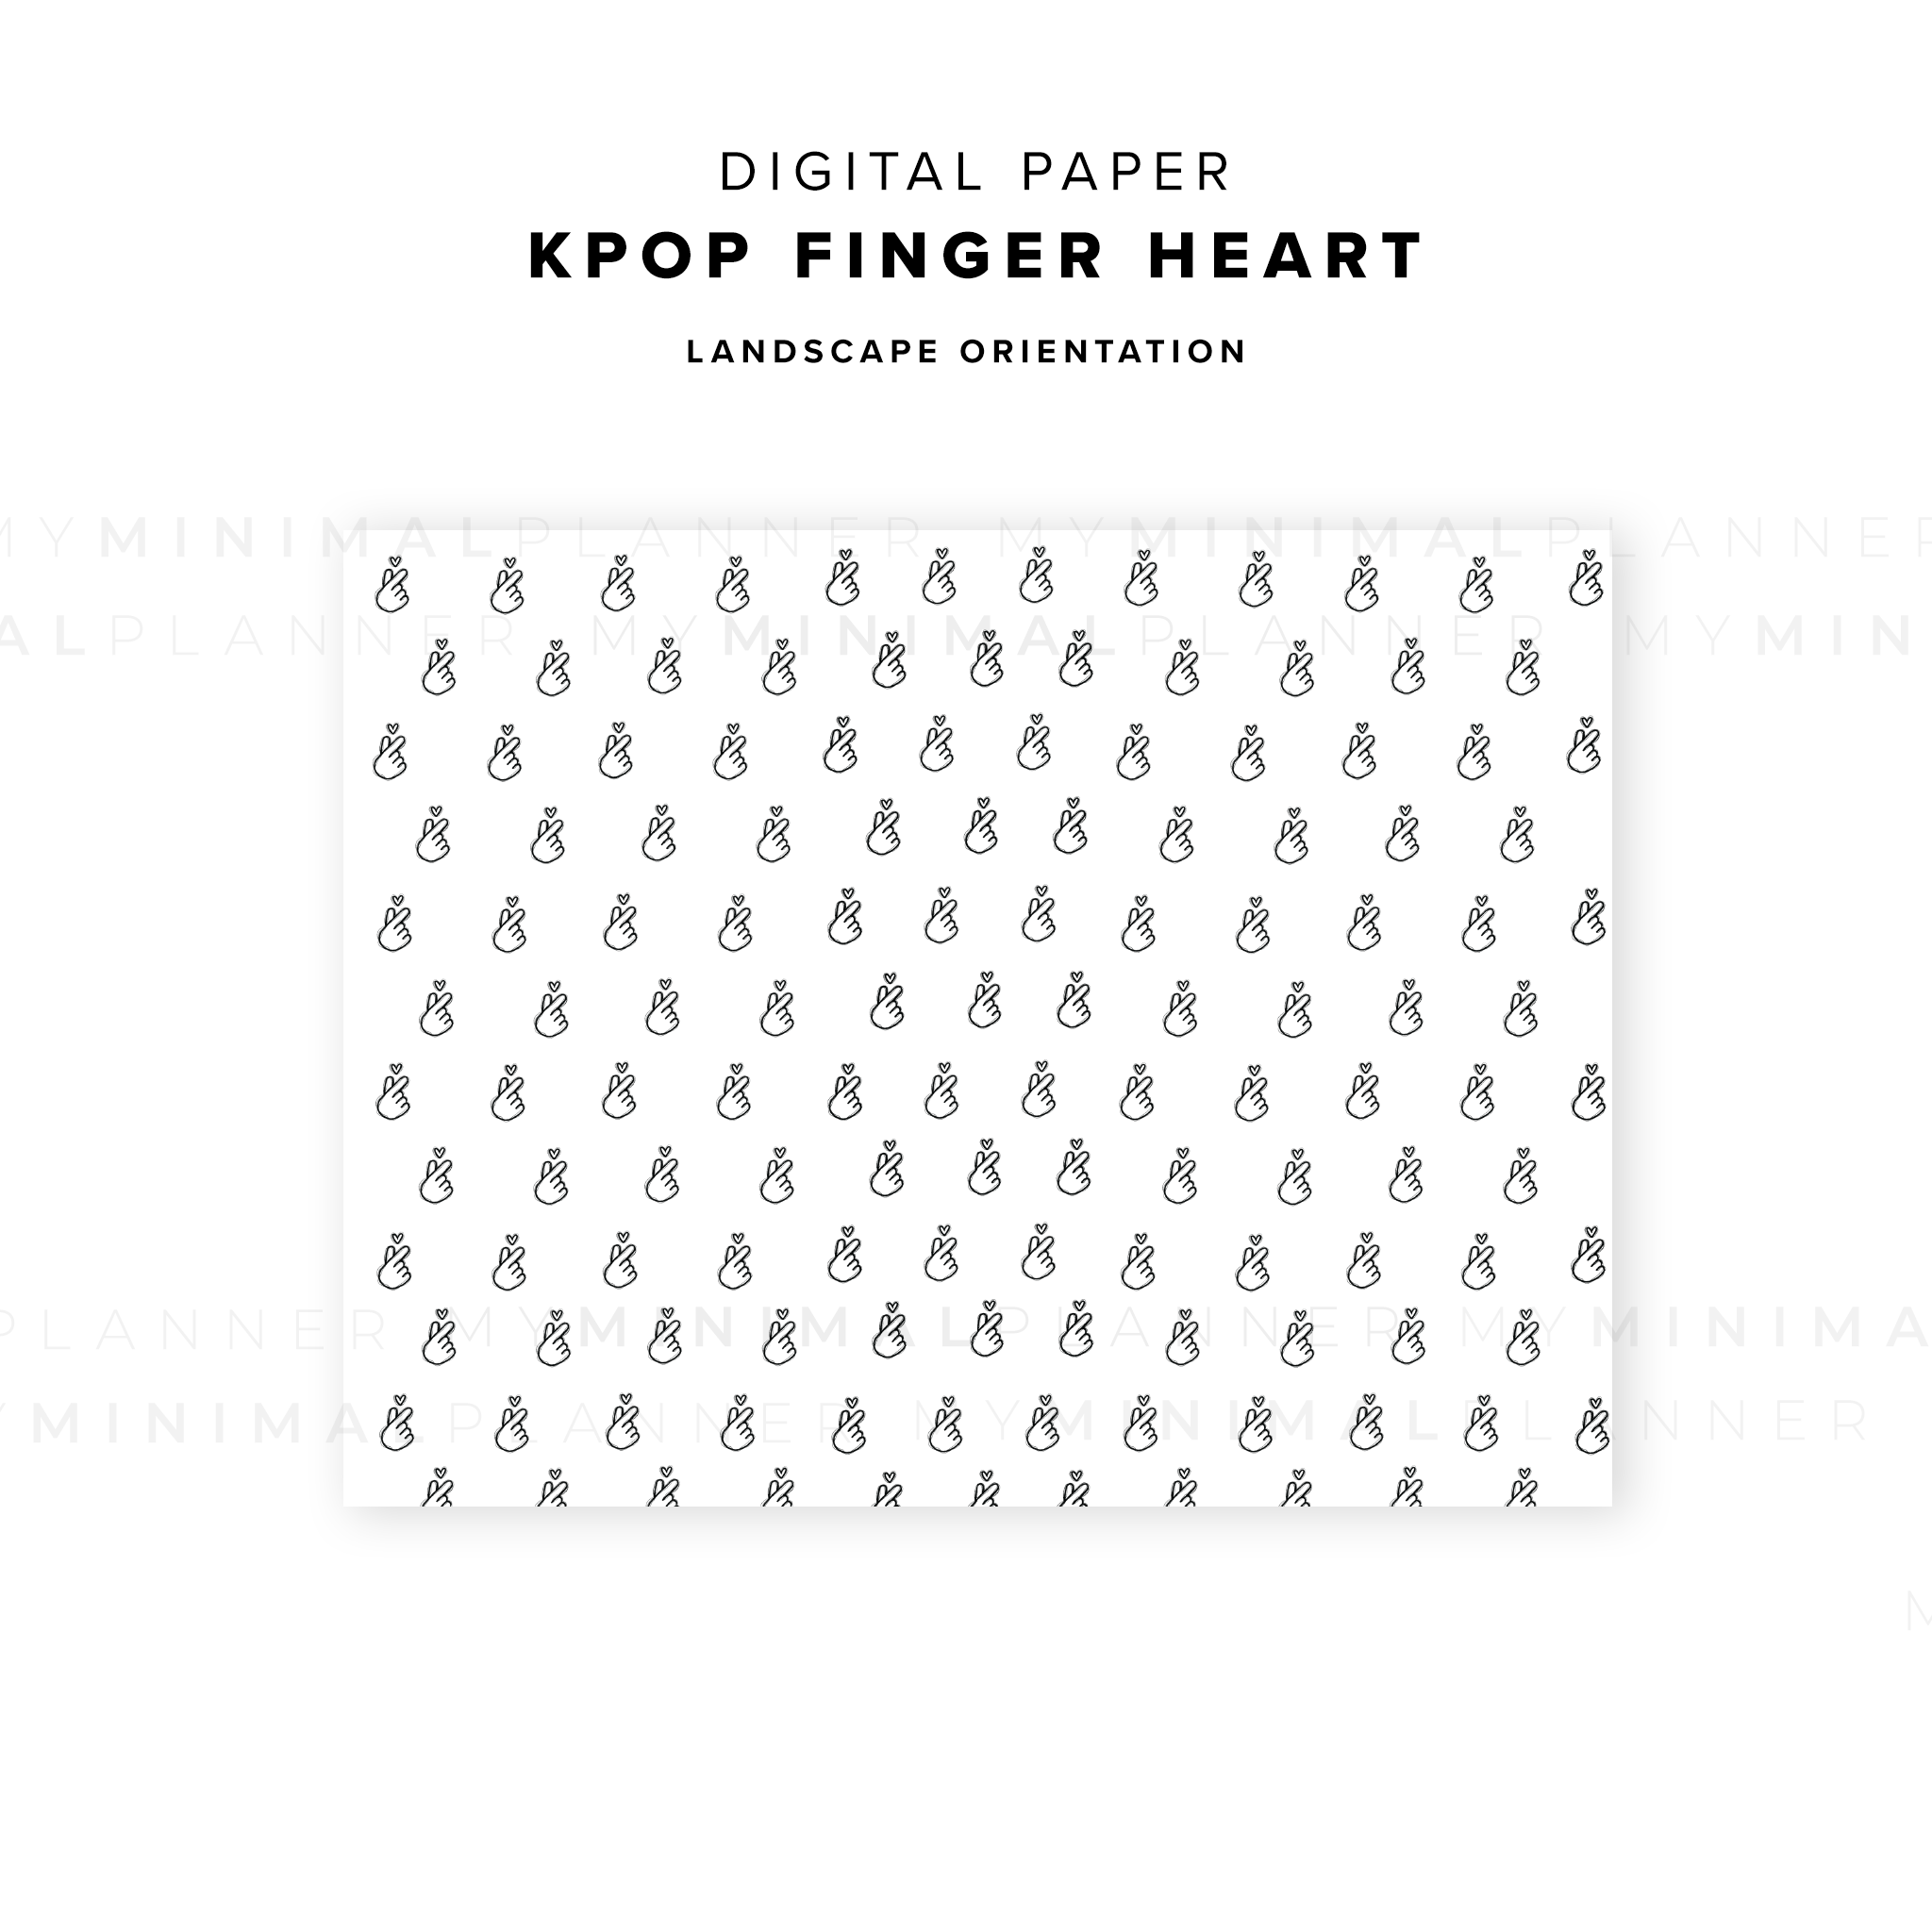 DP13 - KPop Finger Heart - Digital Paper